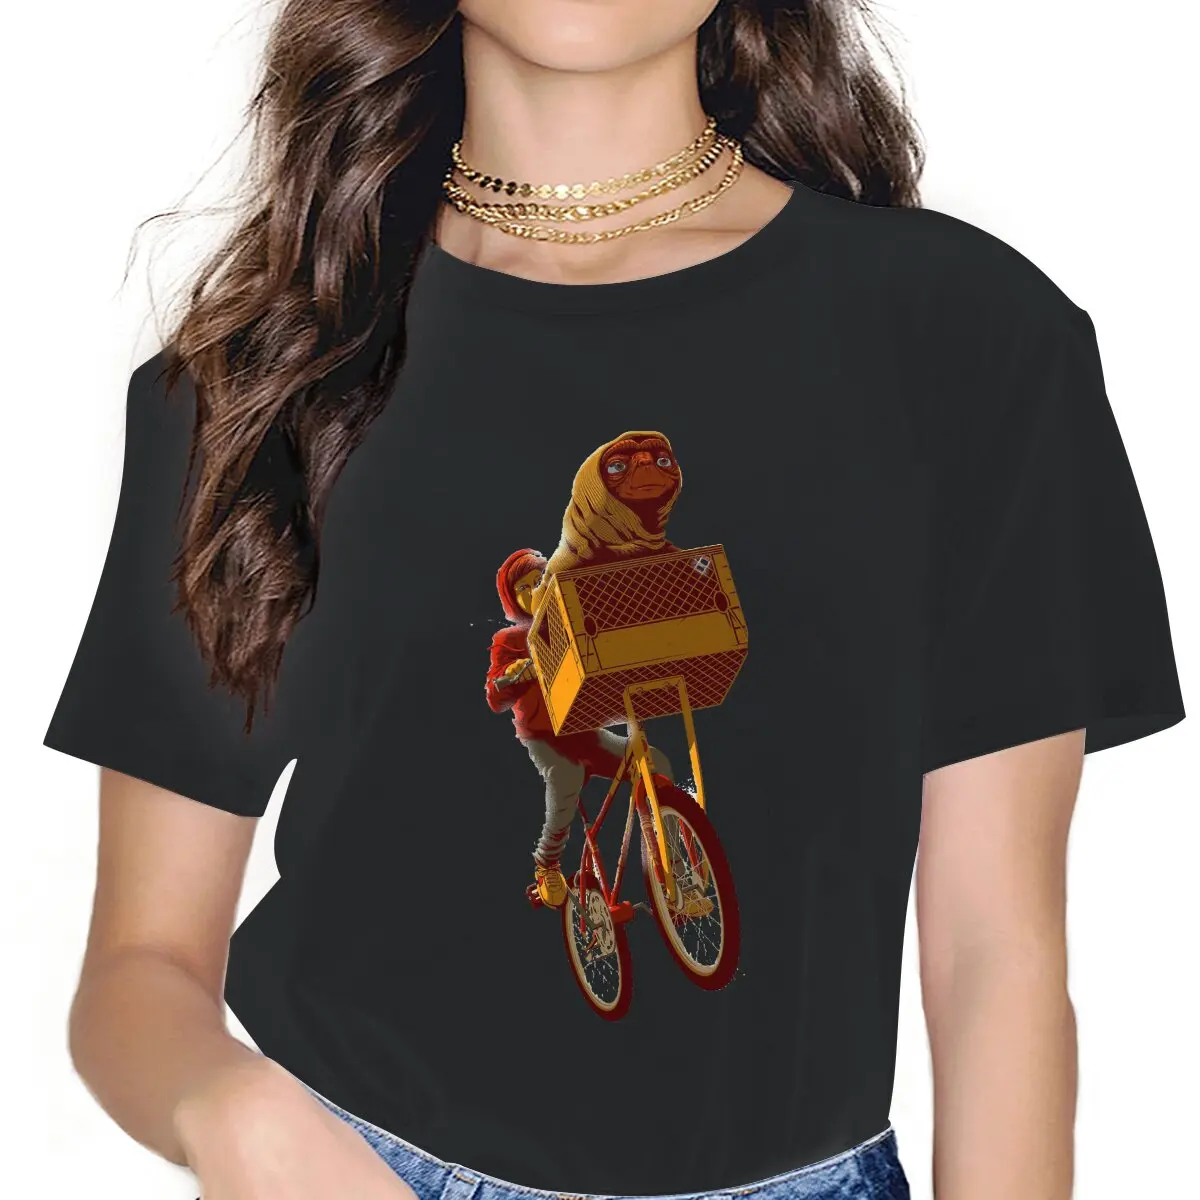 

Creative Bike Fly T-Shirt for Women Round Neck T Shirt E.T. the Extra-Terrestrial Alien Film Short Sleeve Tee Shirt